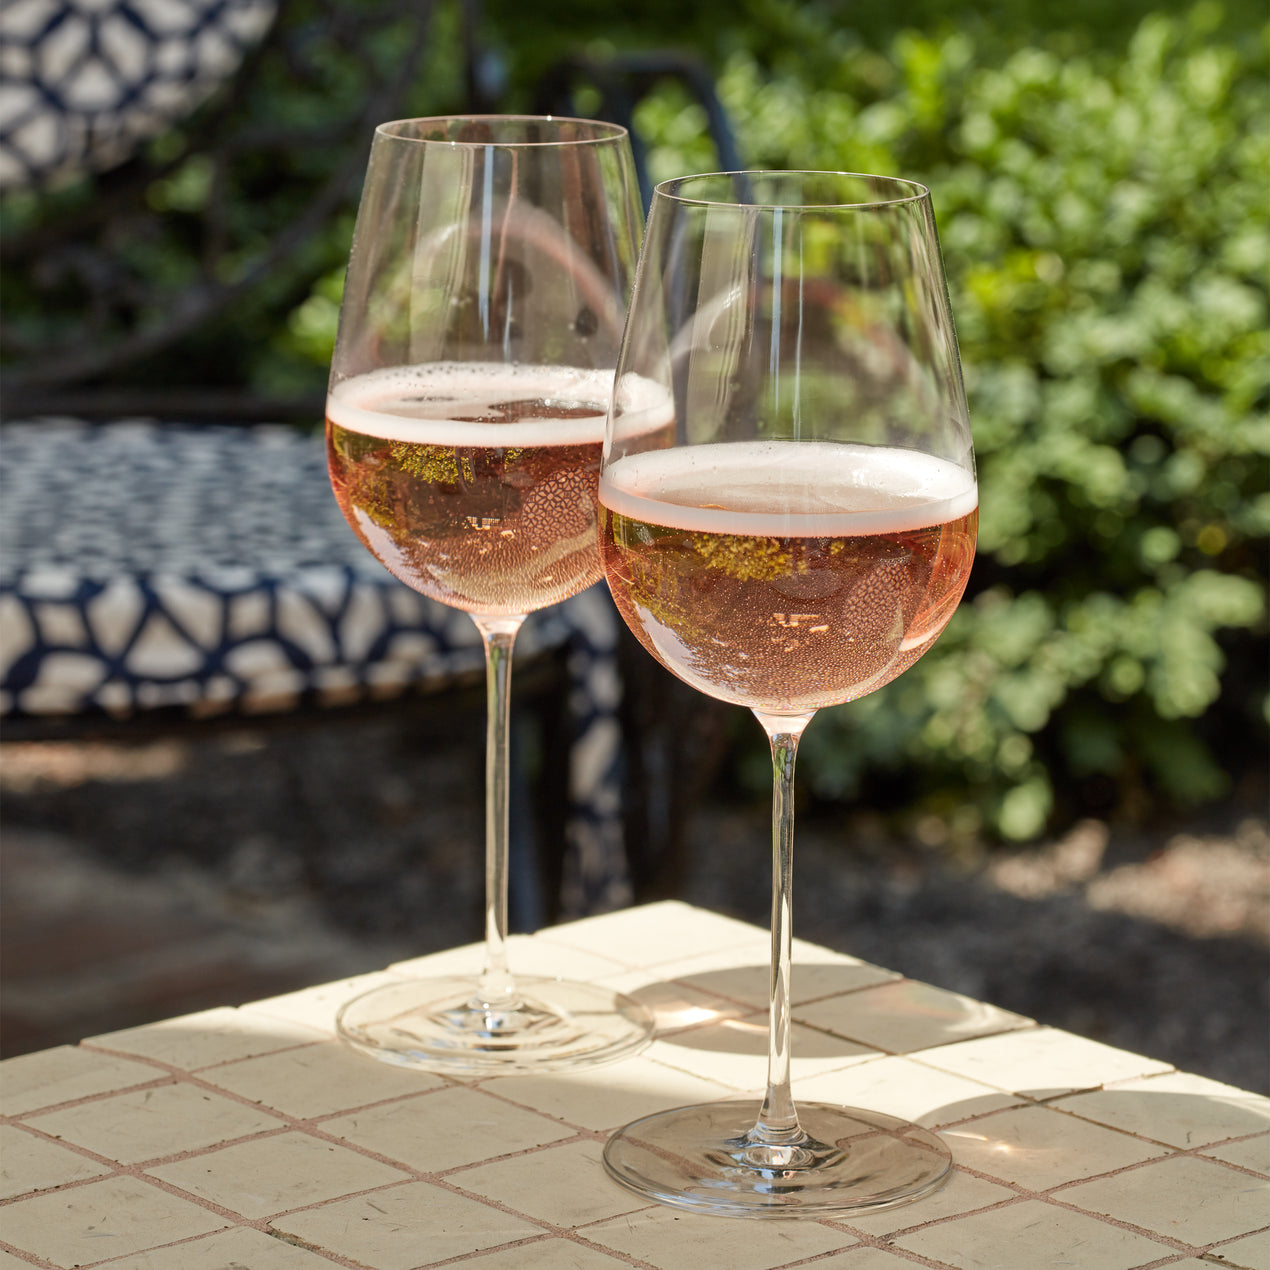 Lenox Tuscany Signature Warm Region Wine Glass, Set of 2